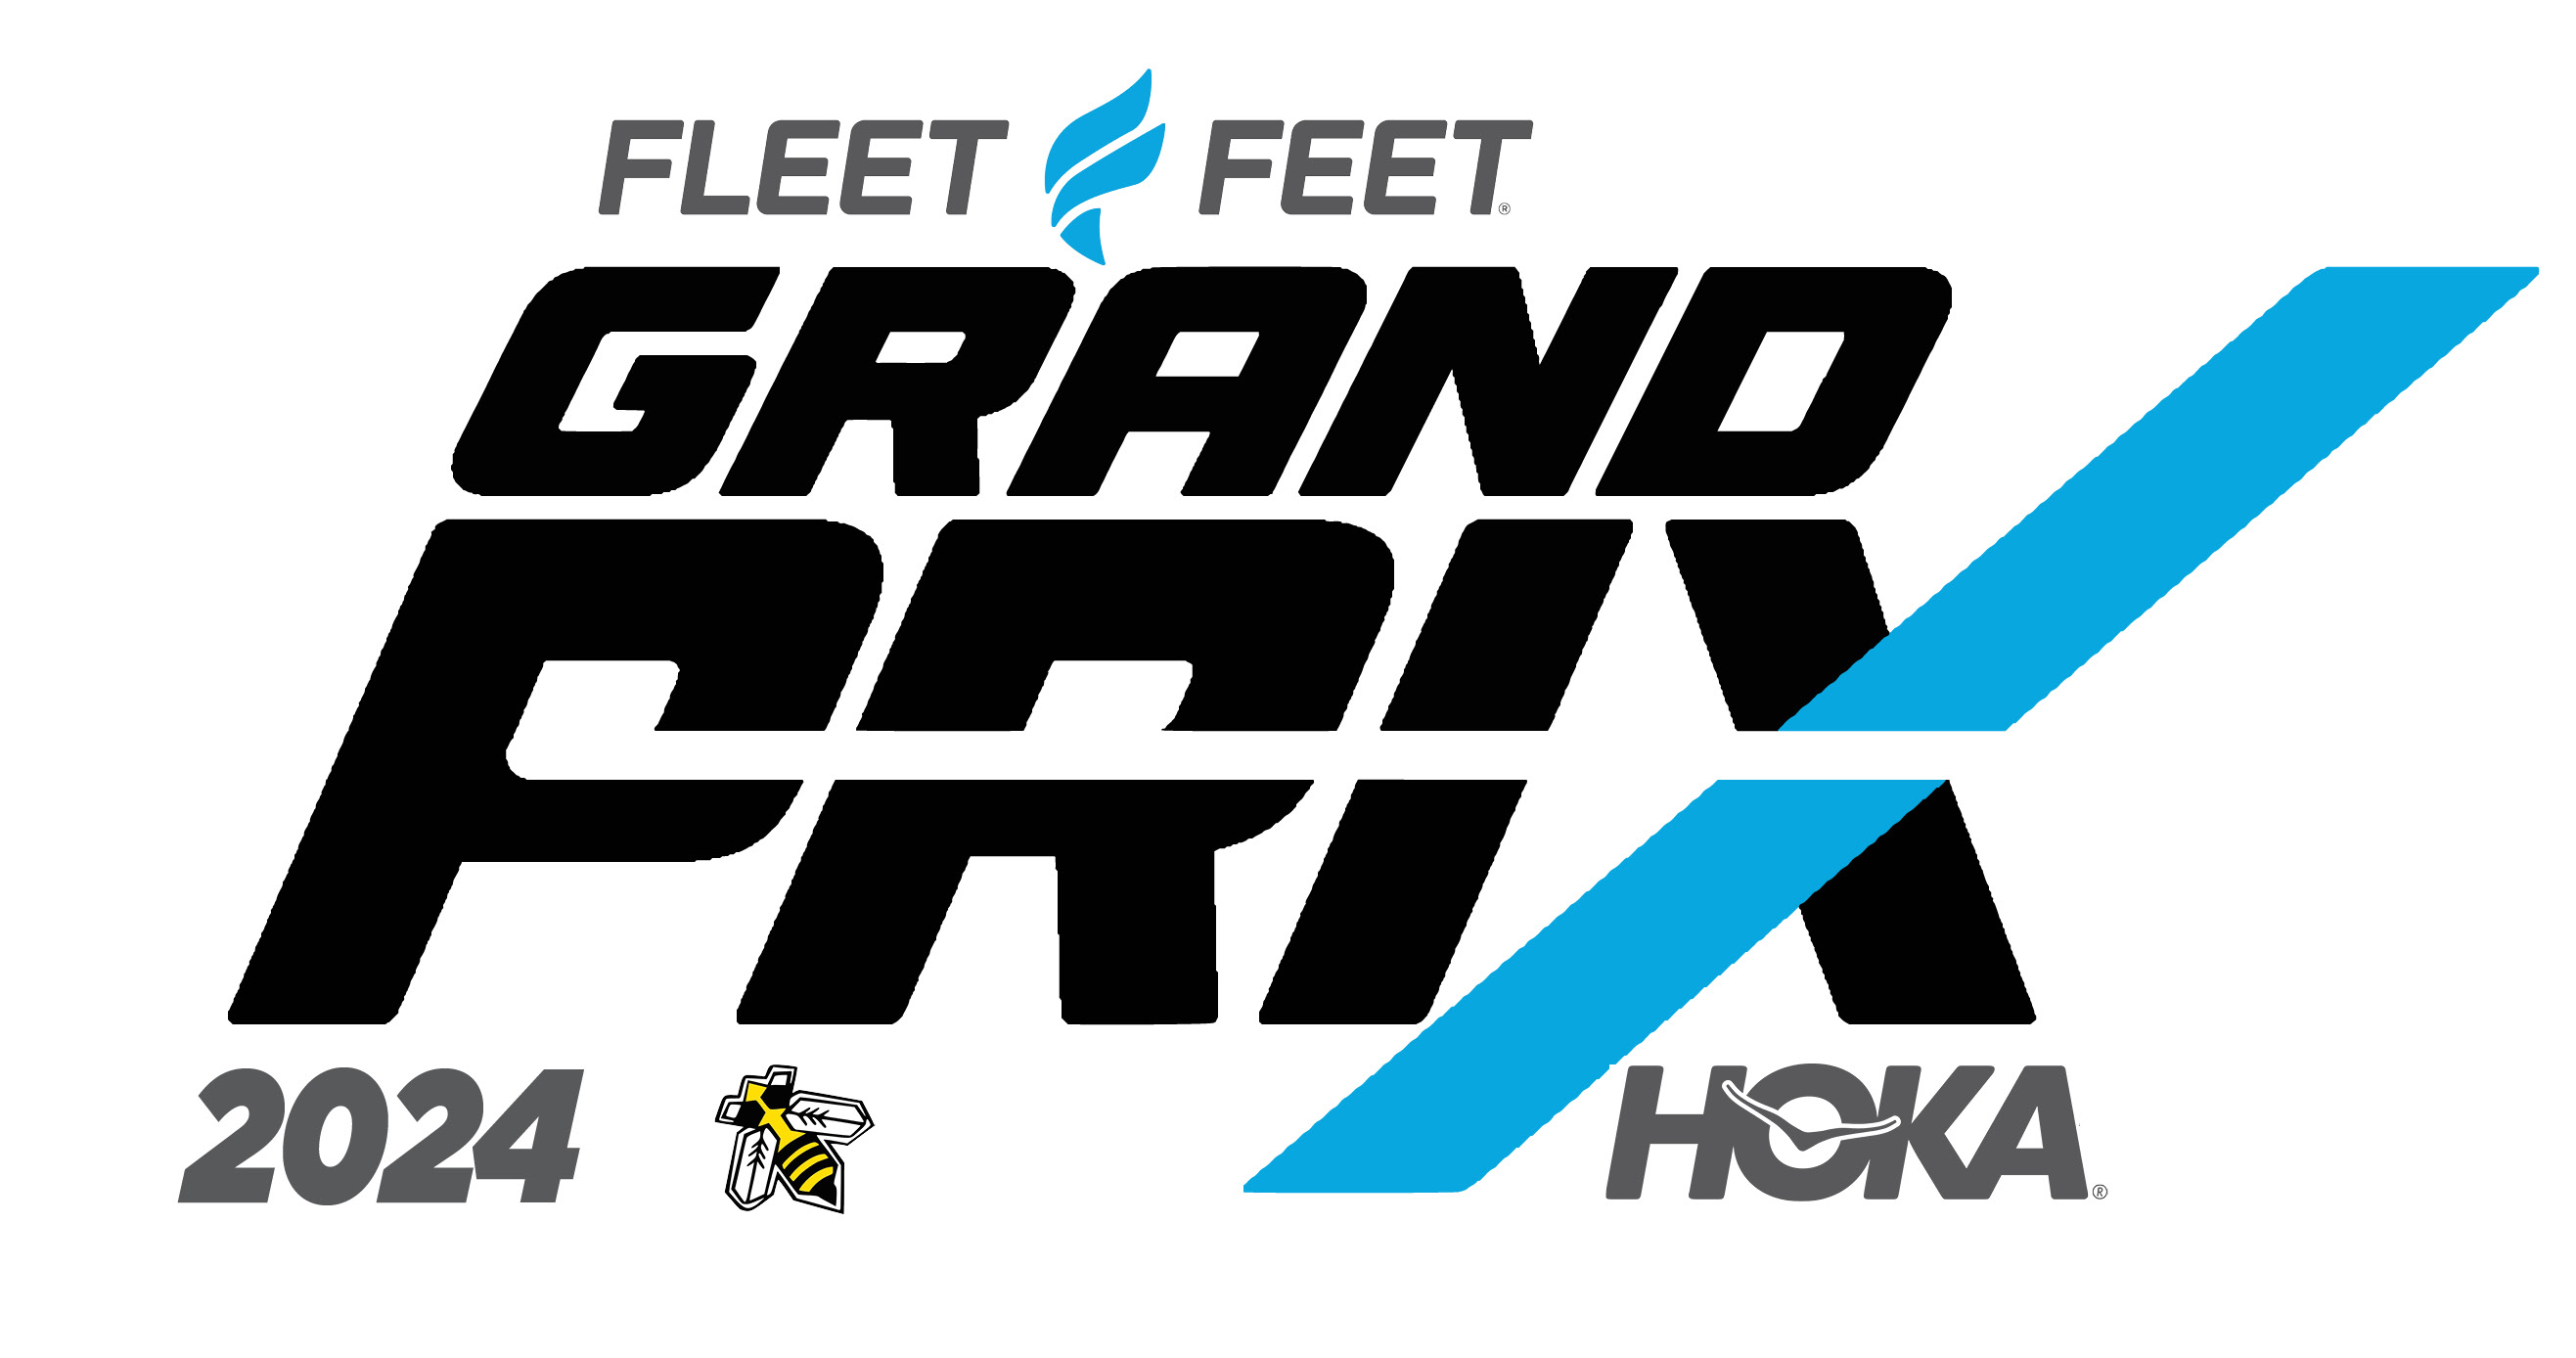 Fleet Feet Grand Prix Series - YellowJacket Racing